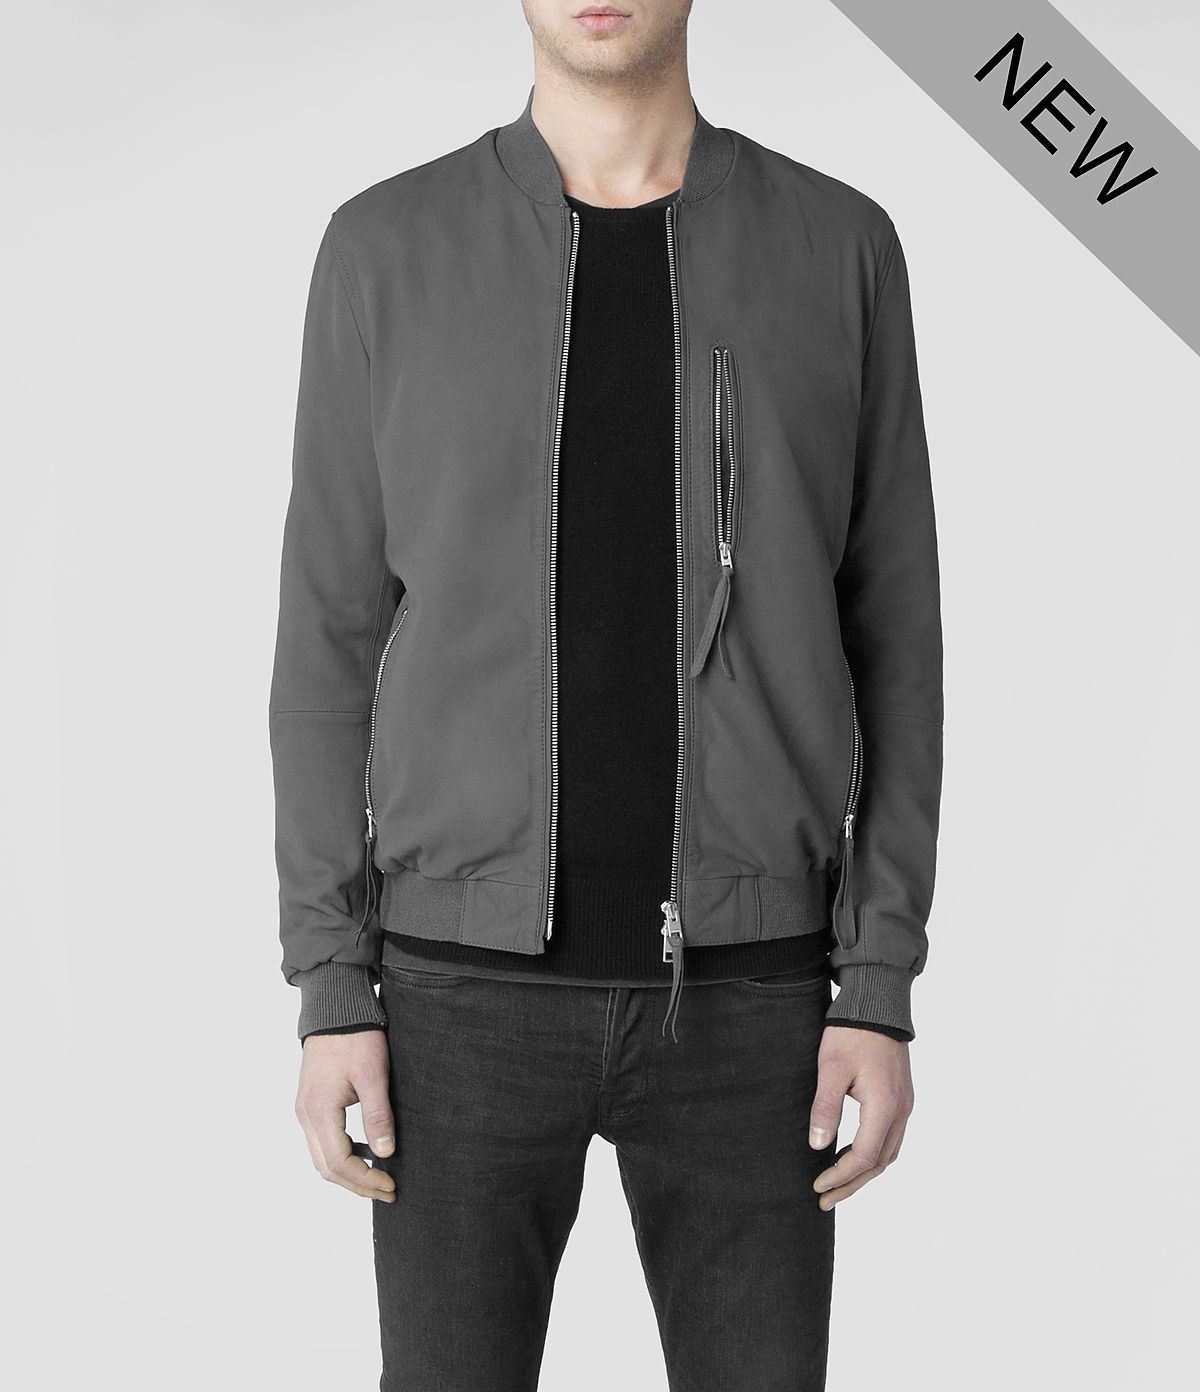 AllSaints Sonar Leather Bomber Jacket in Gray for Men - Lyst